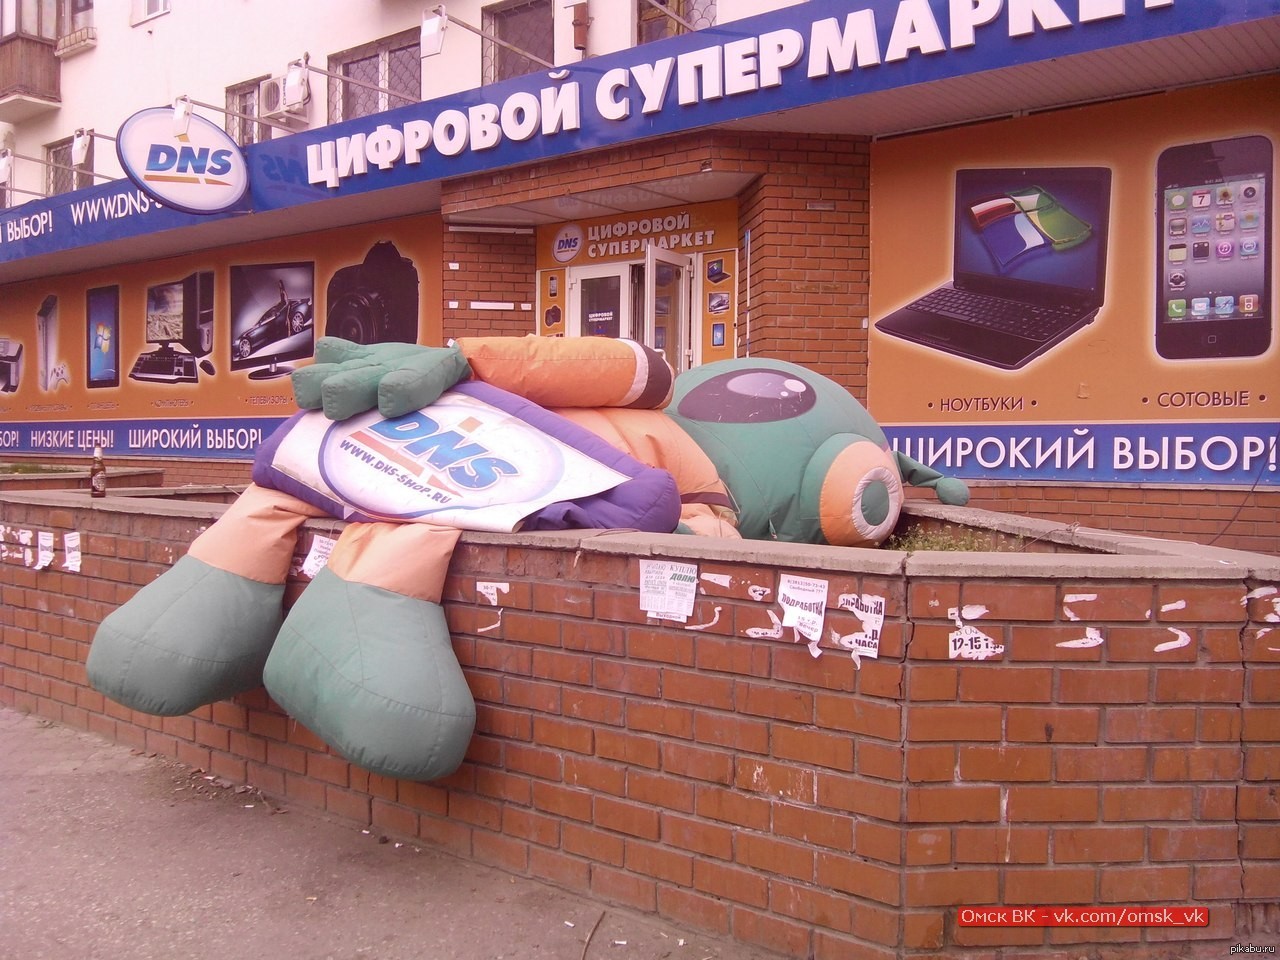 Уснул), Омск, DNS.